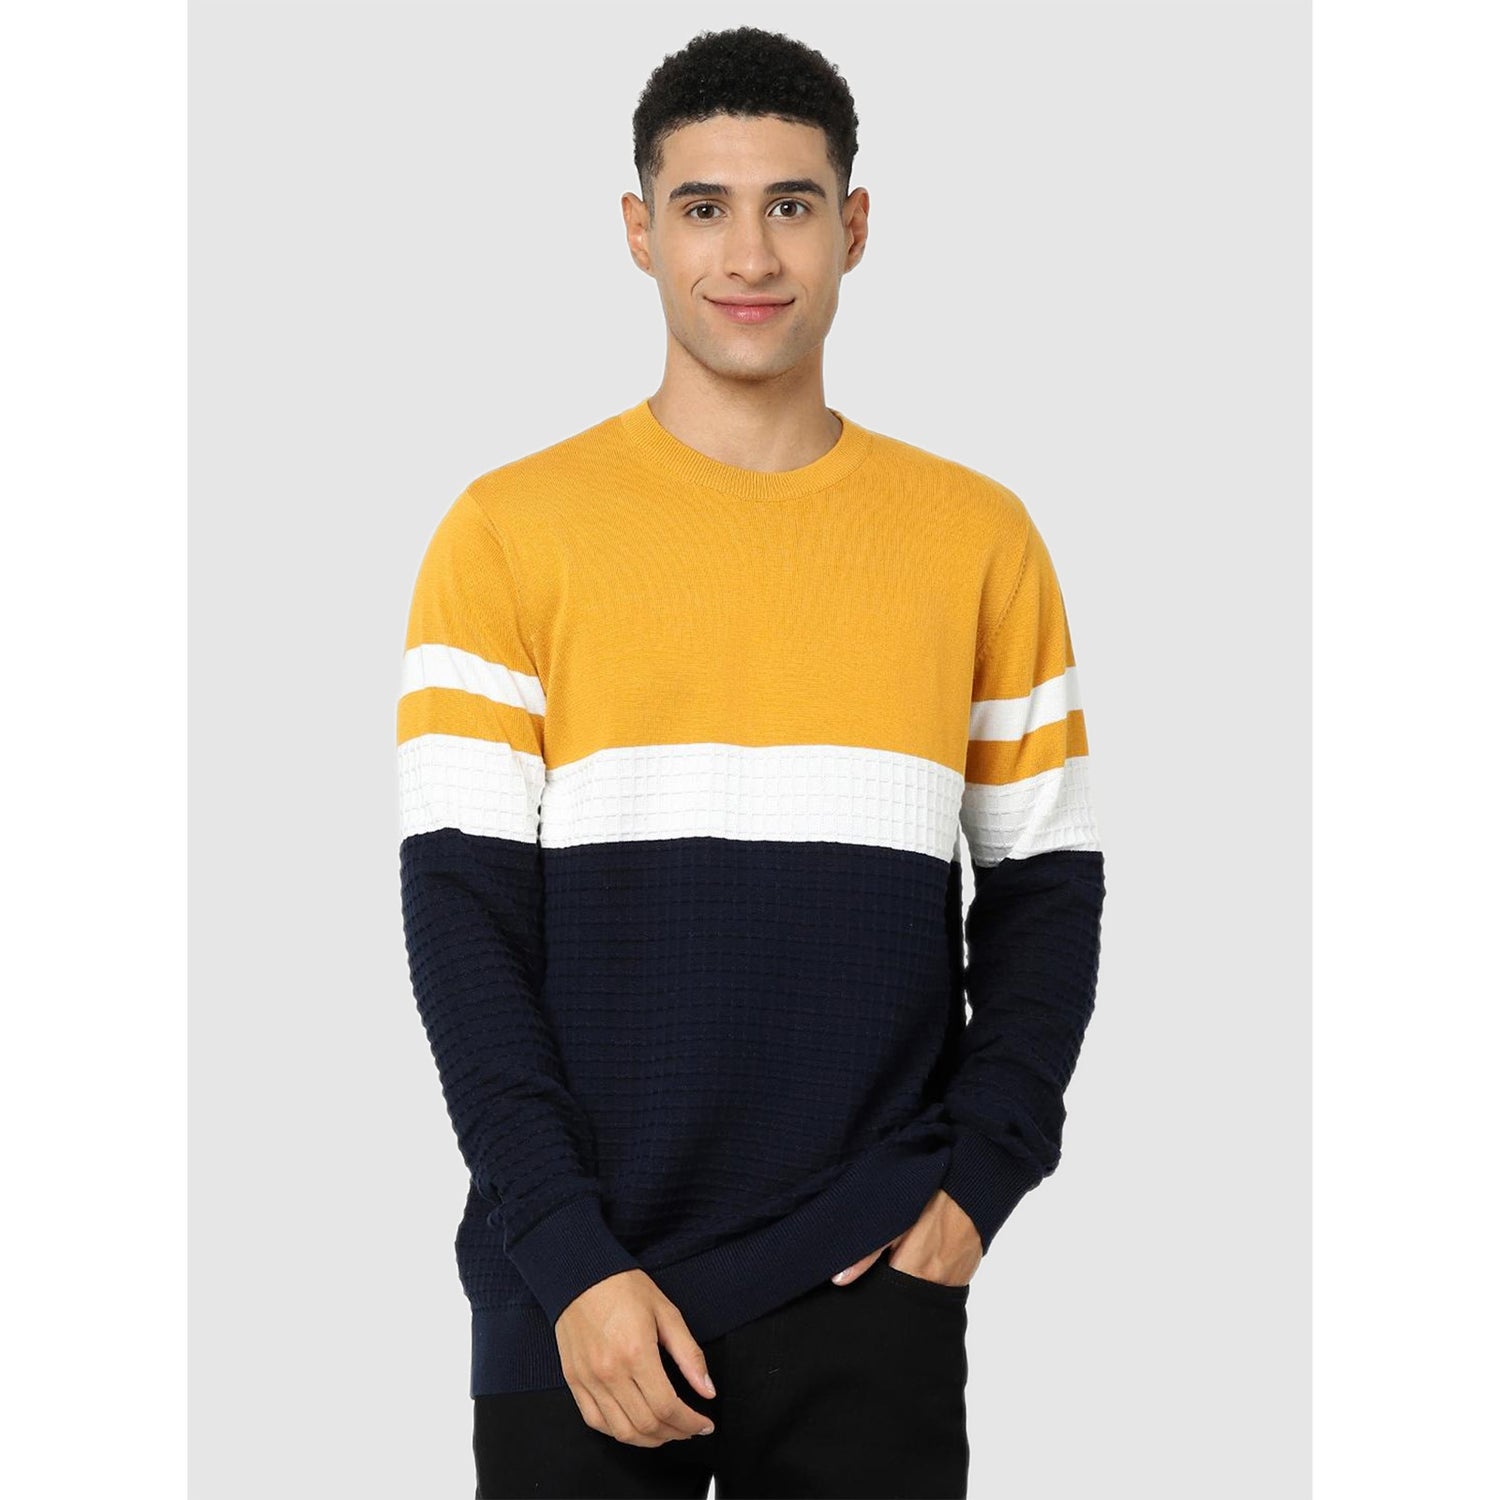 Navy Color Regular Fit Block Sweater (Various Sizes)